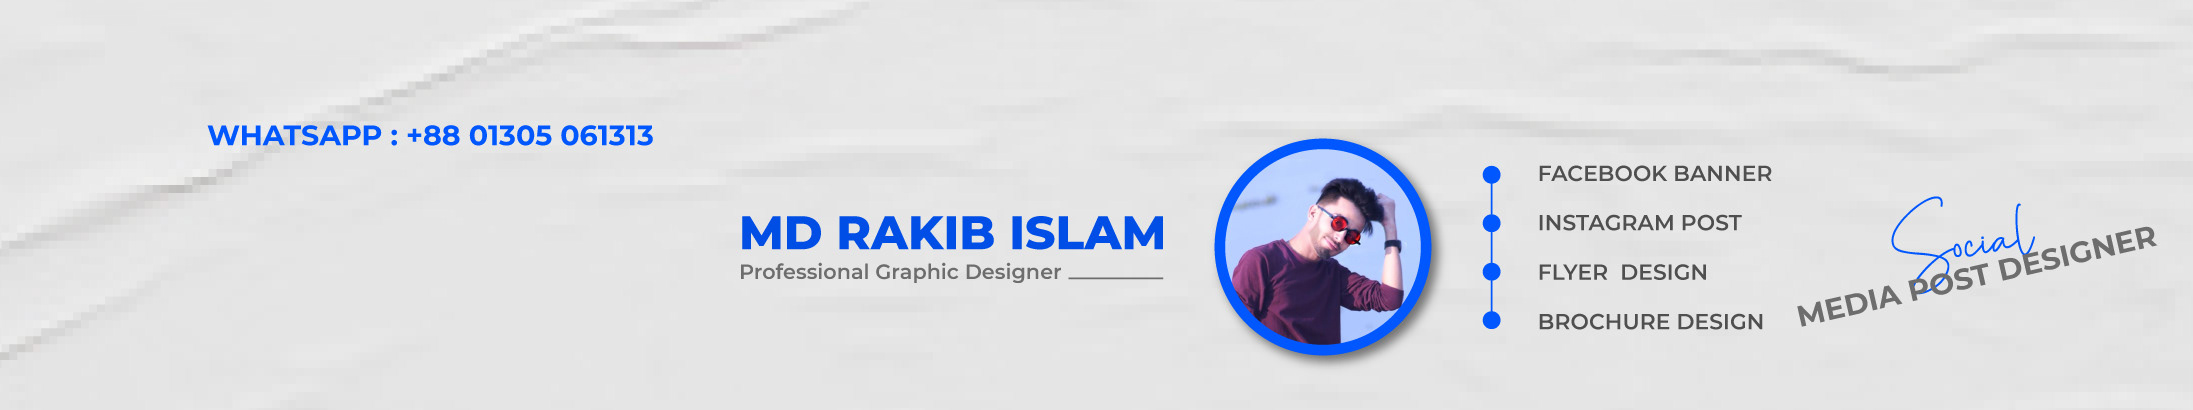 Baner profilu użytkownika Md Rakib Islam